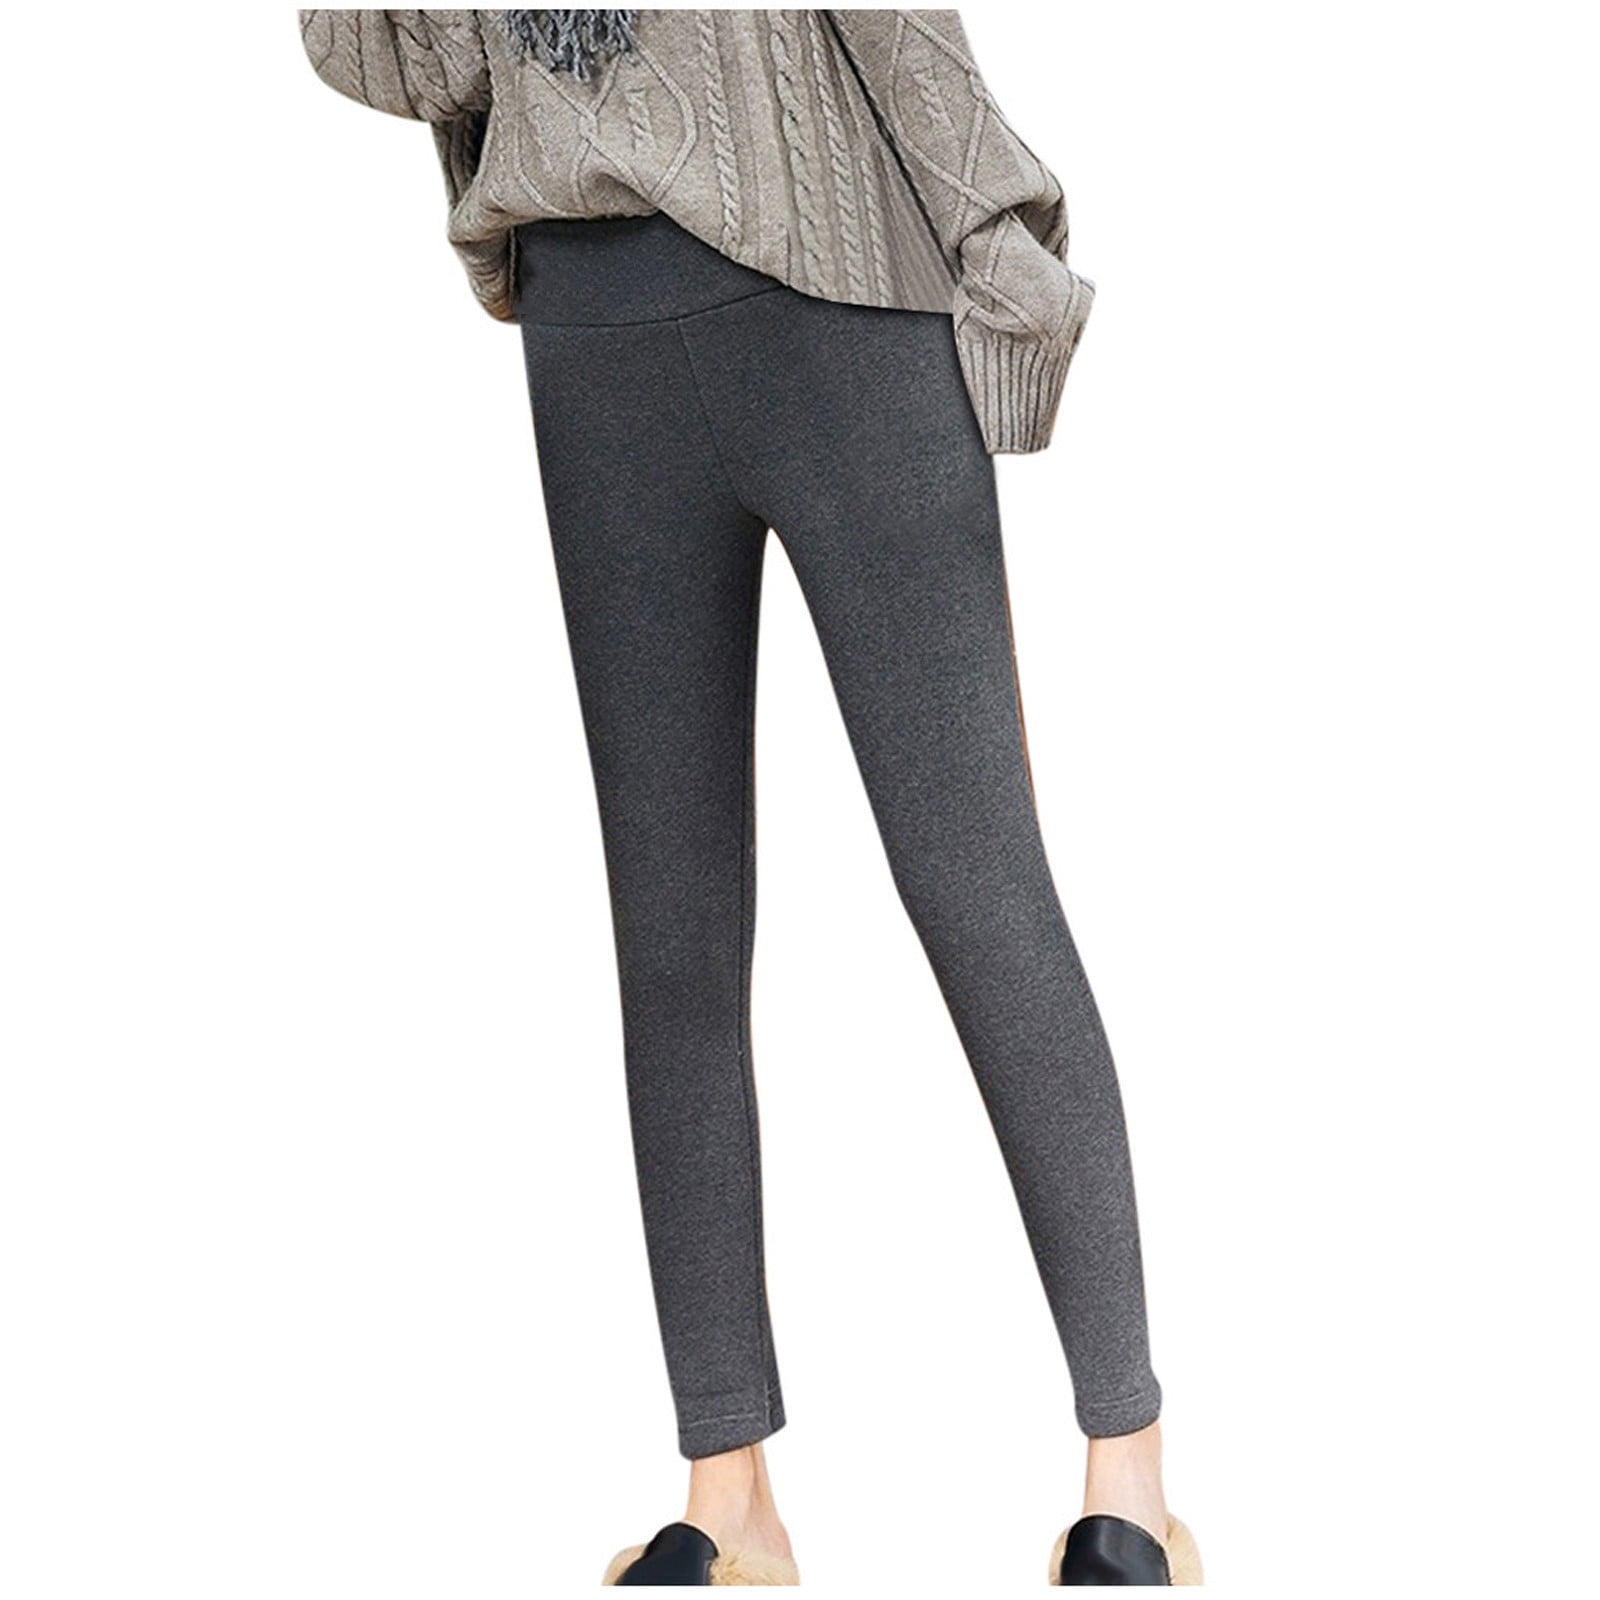 Mrat Full Length Pants Leggings Outfits For Women Pants Fashion